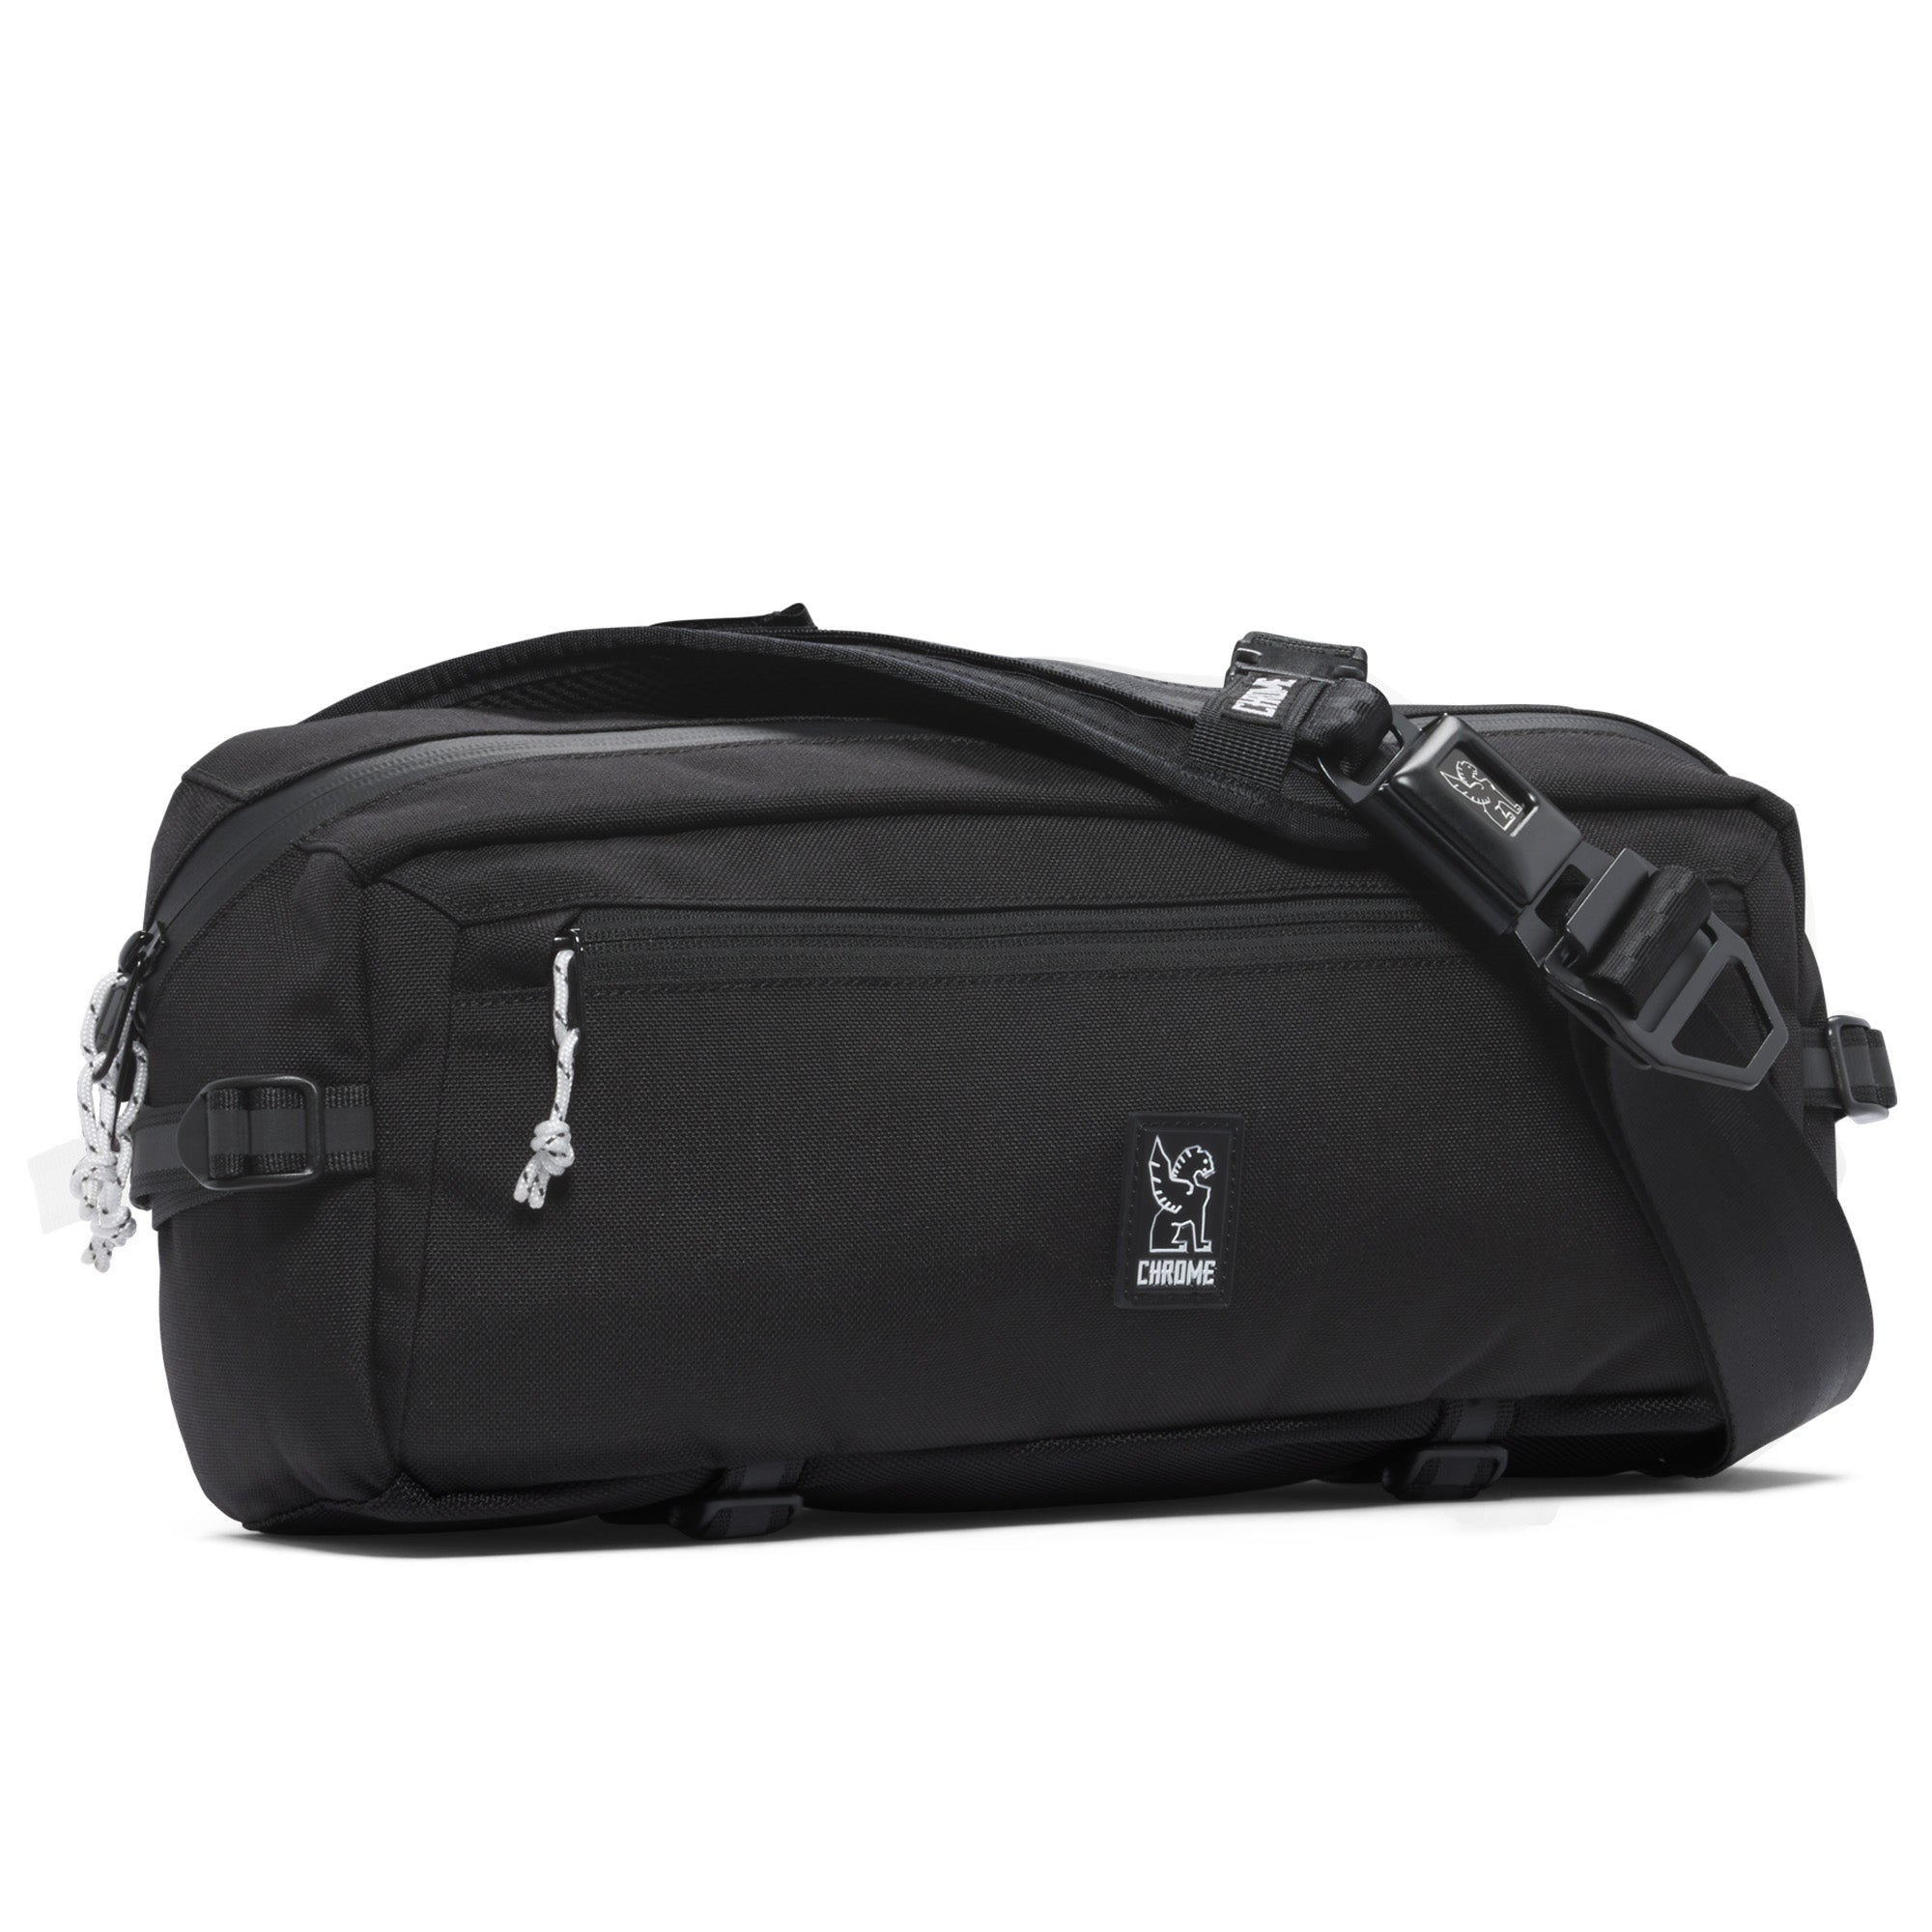 Nike Big Hook Print Sports Leisure Outdoor Men's and Women's Crossbody Bag  Single Shoulder Bag Waist Bag Chest Bag Large Capacity